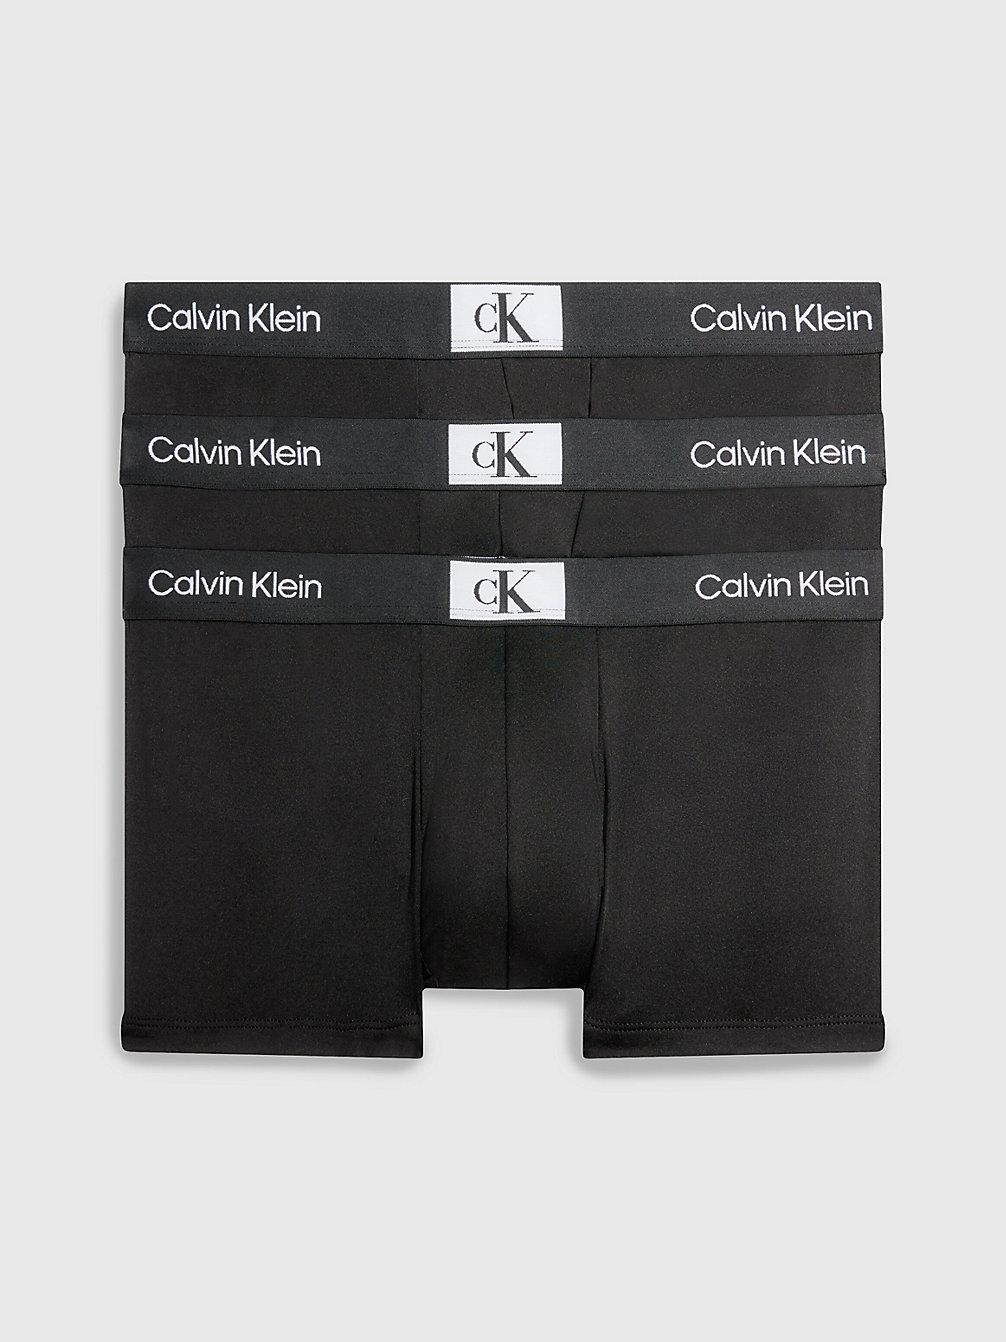 BLACK/ BLACK / BLACK > Zestaw 3 Par Bokserek Z Niskim Stanem - Ck96 > undefined Mężczyźni - Calvin Klein